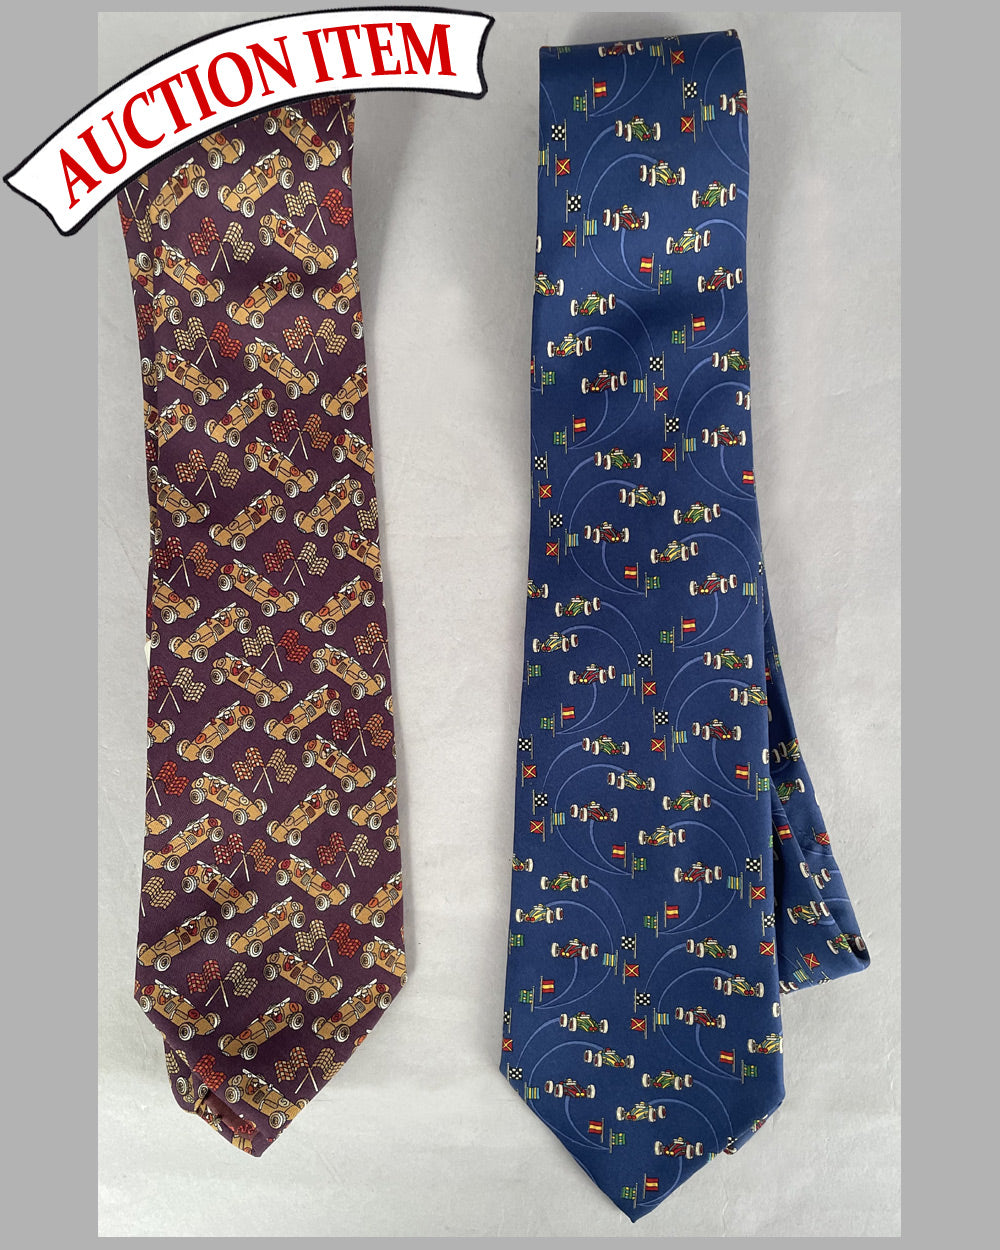 14 - Two Salvatore Ferragamo vintage neck ties